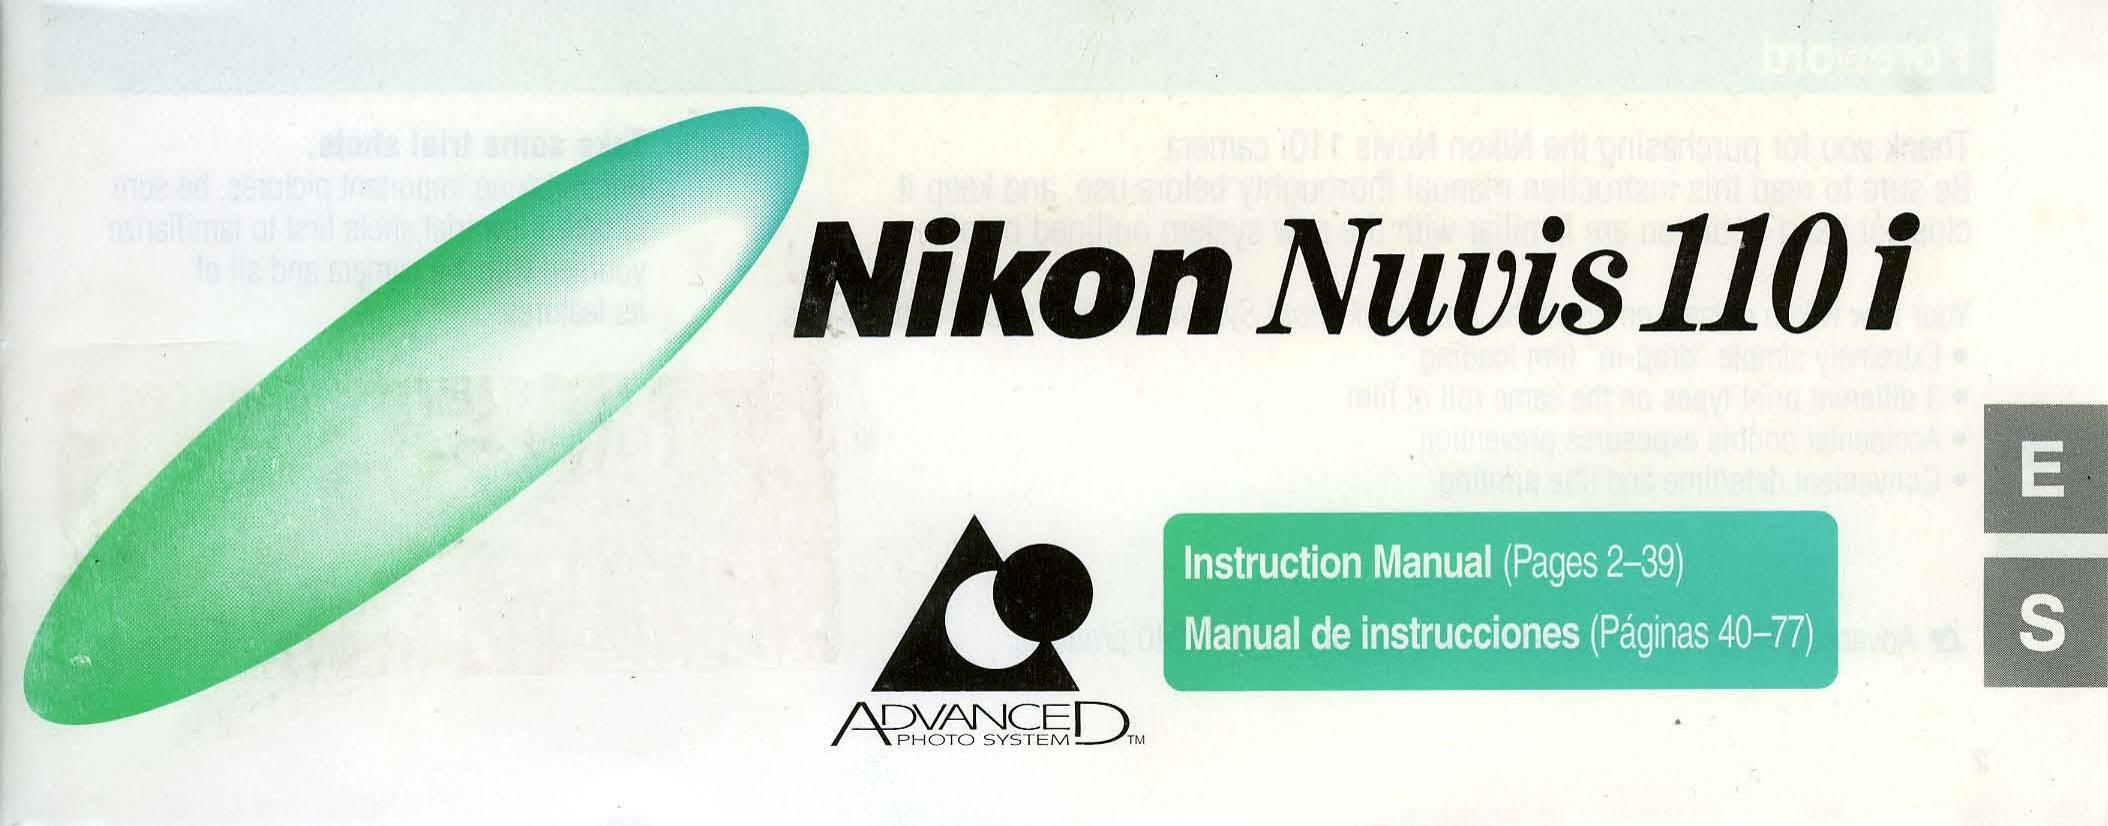 Nikon 110i Digital Camera User Manual